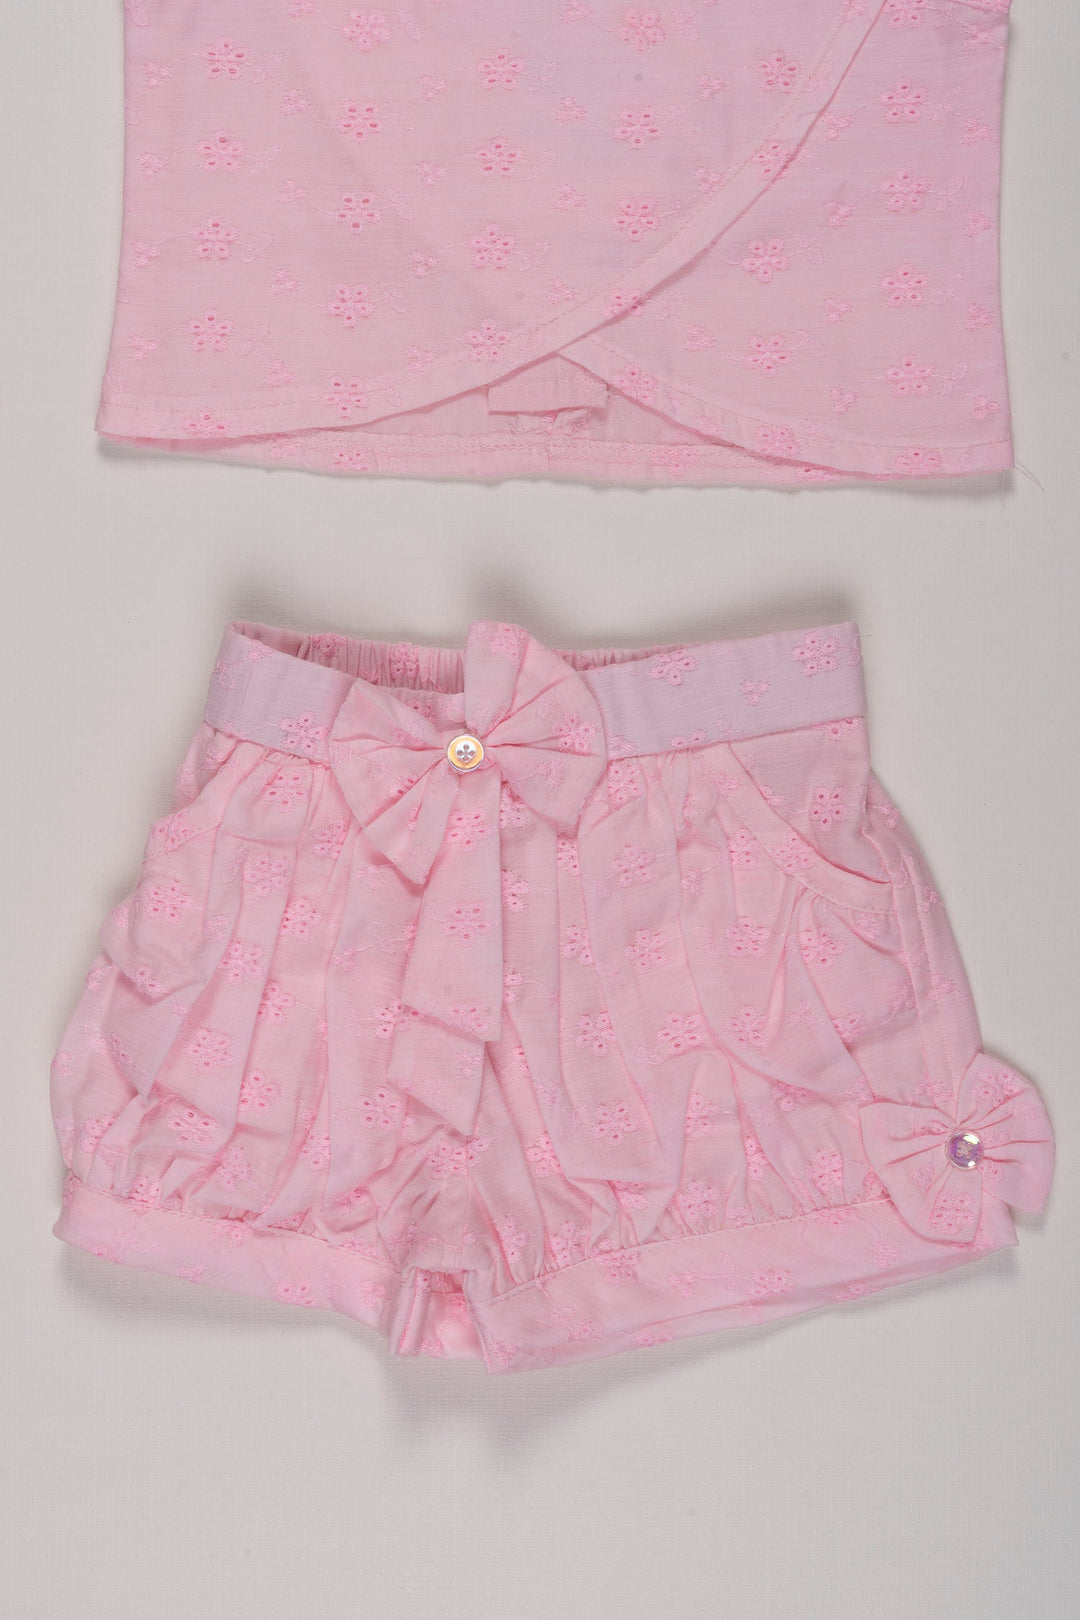 The Nesavu Baby Casual Sets Sweet Pink Embroidered Top and Shorts Set for Girls Nesavu Girls Pink Embroidered Outfit Set | Floral Sleeveless Top | Ruffled Shorts | The Nesavu